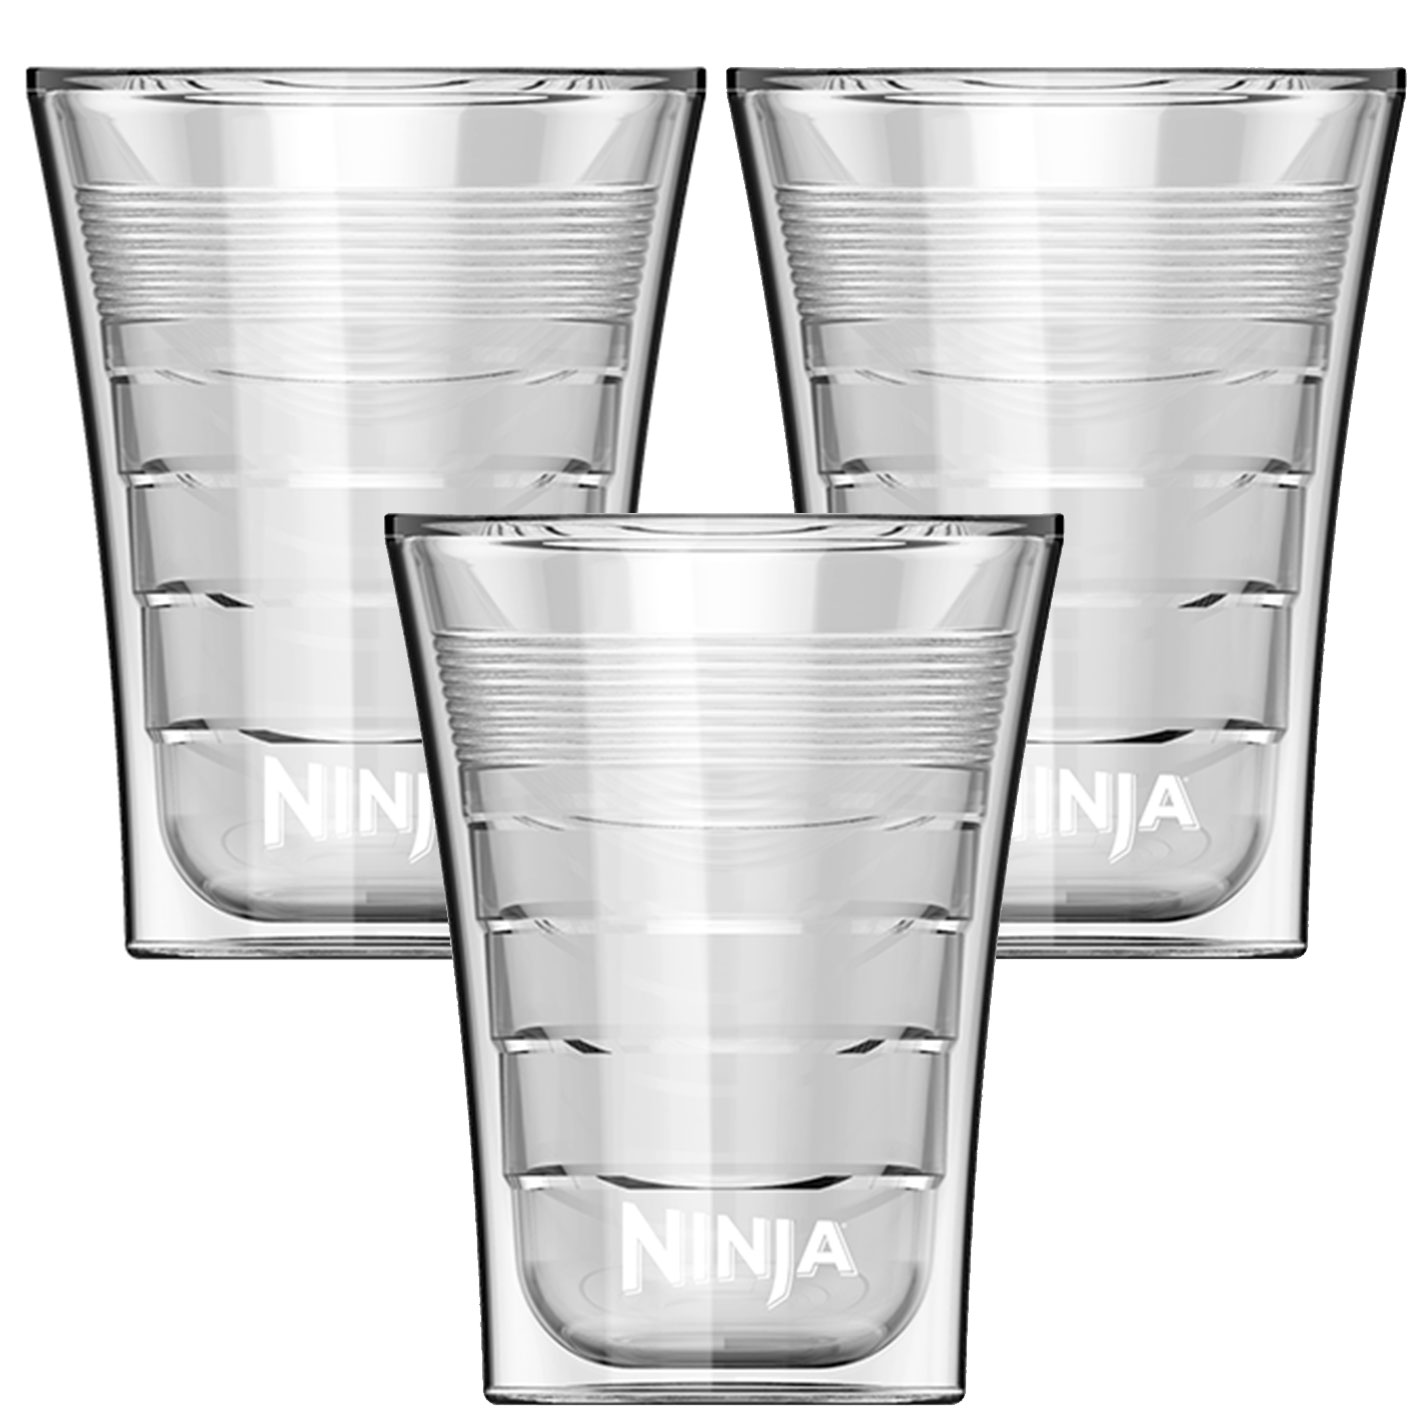 Ninja 14 Oz Microwave Safe Plastic Double Insulated Cup for Coffee Bar